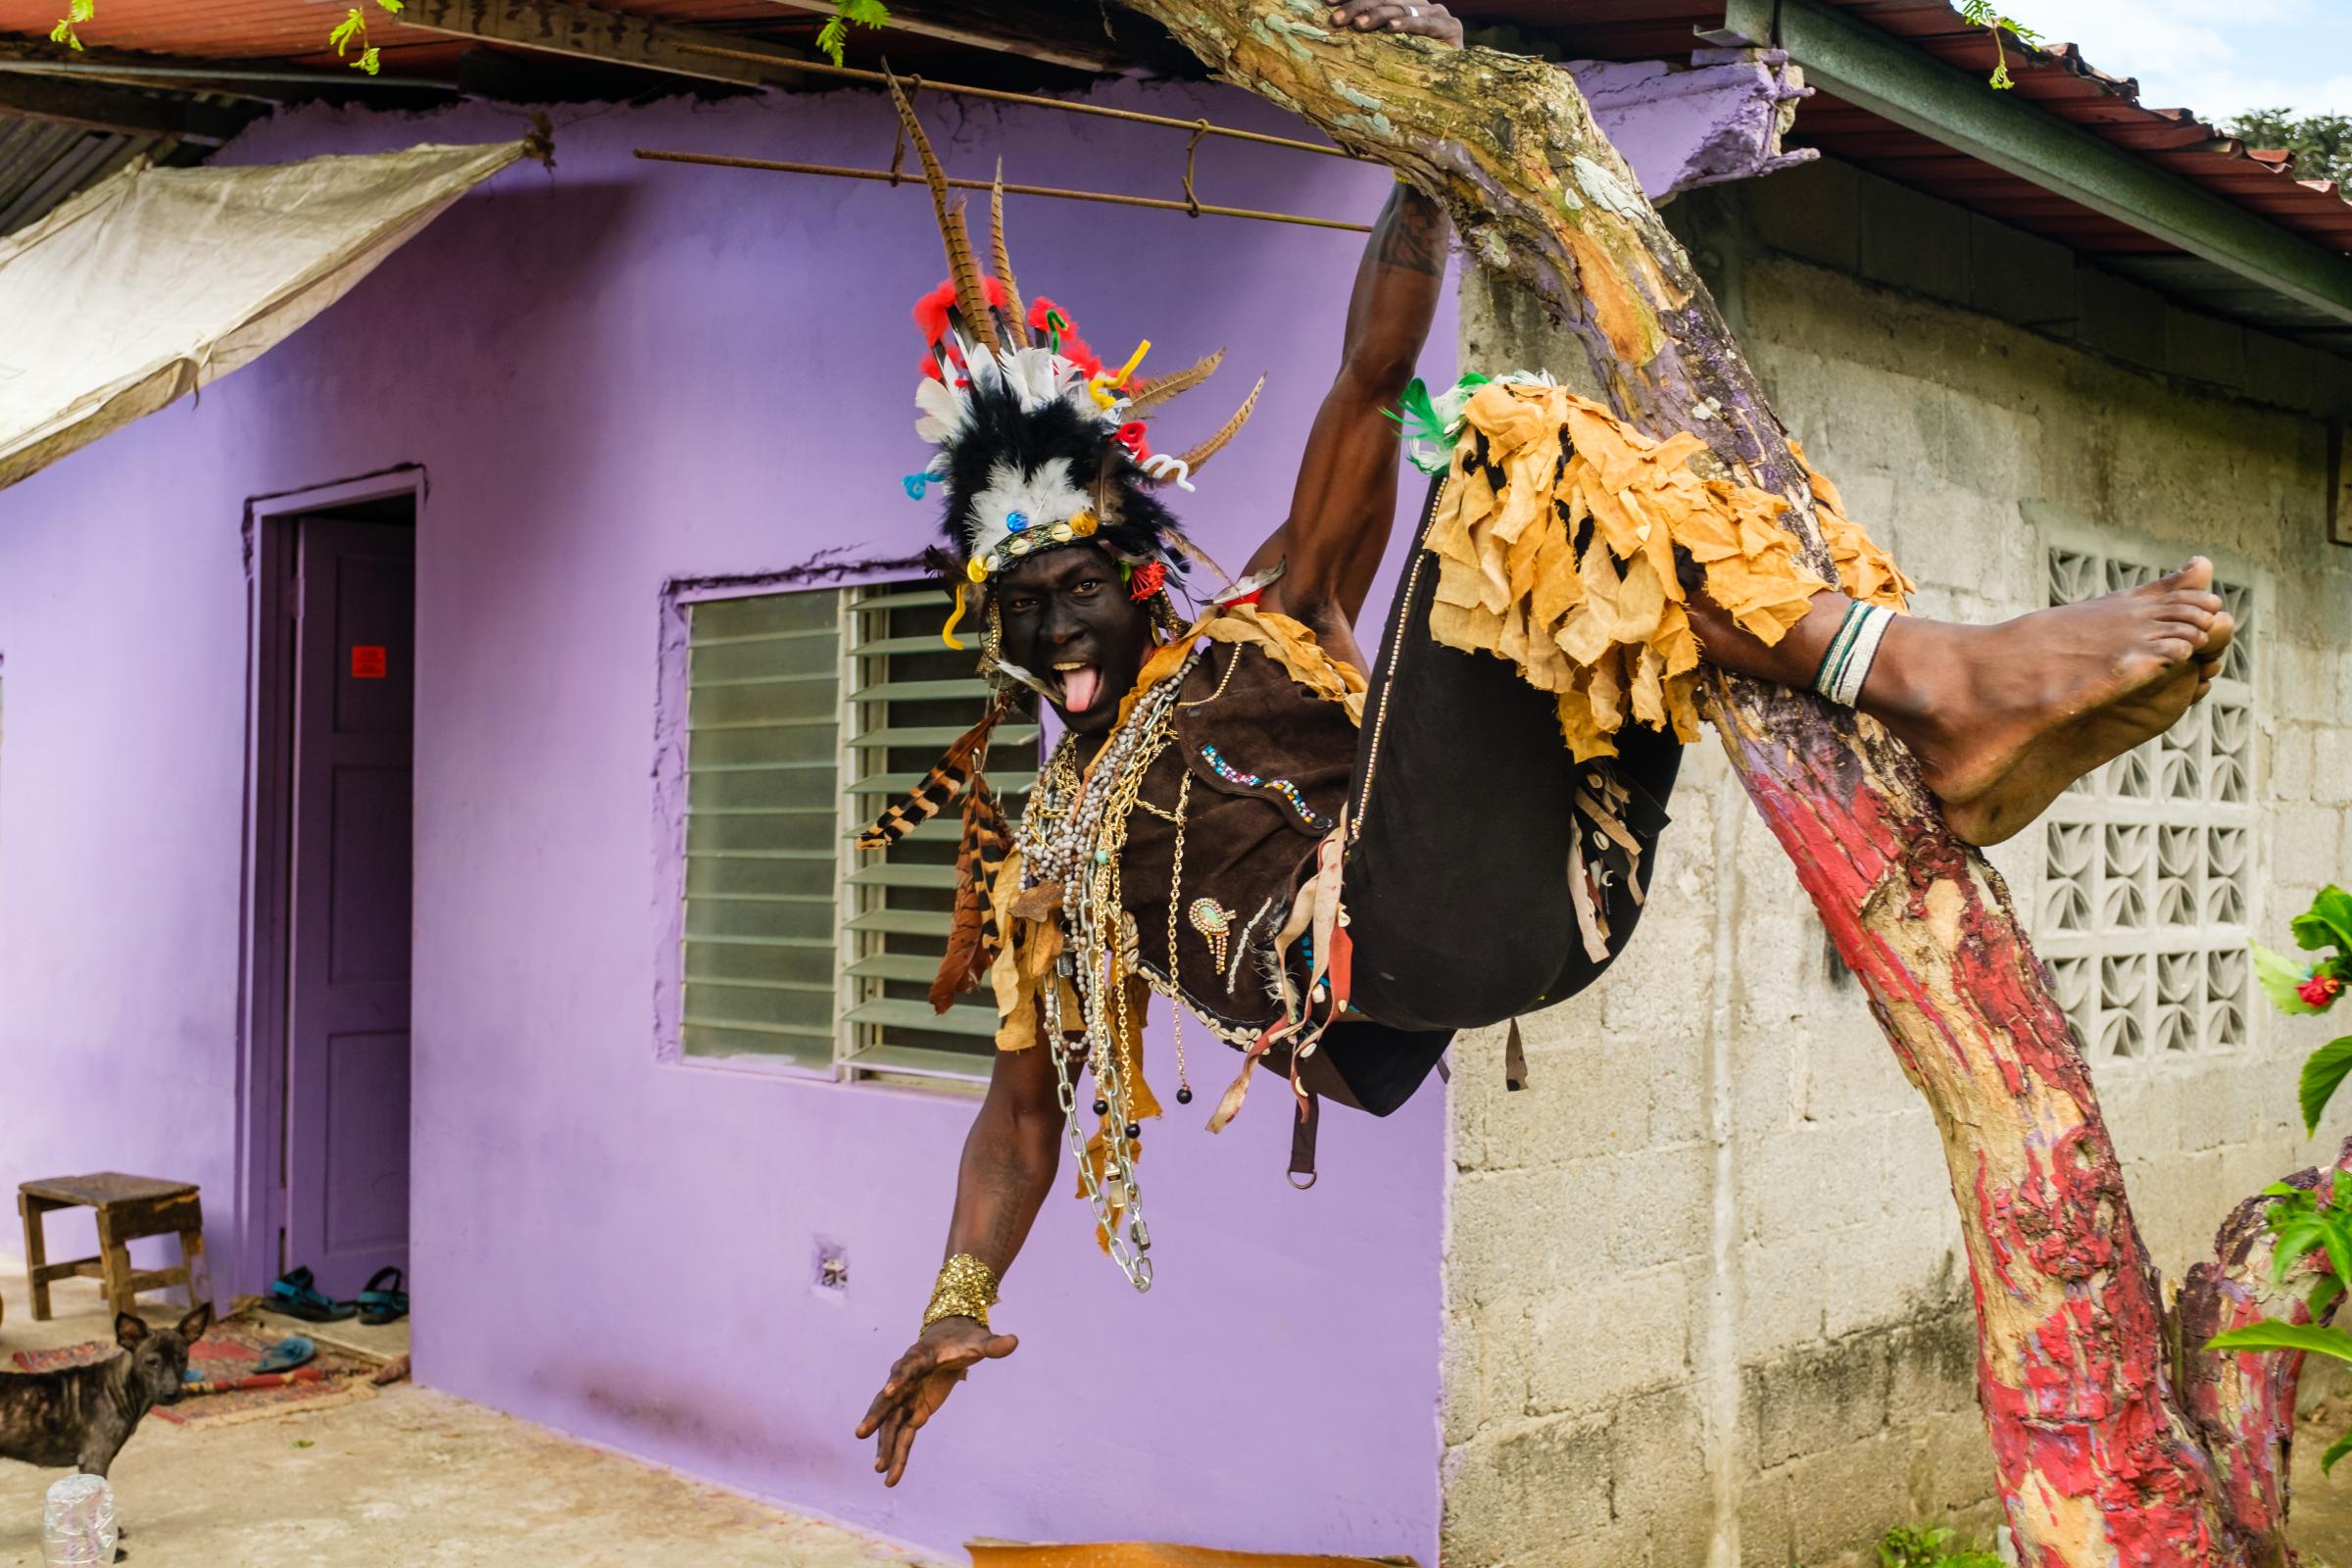 Congo Culture, Portobelo, Panama - Nelson, dressing and posing as a Congo. Congo traditions...